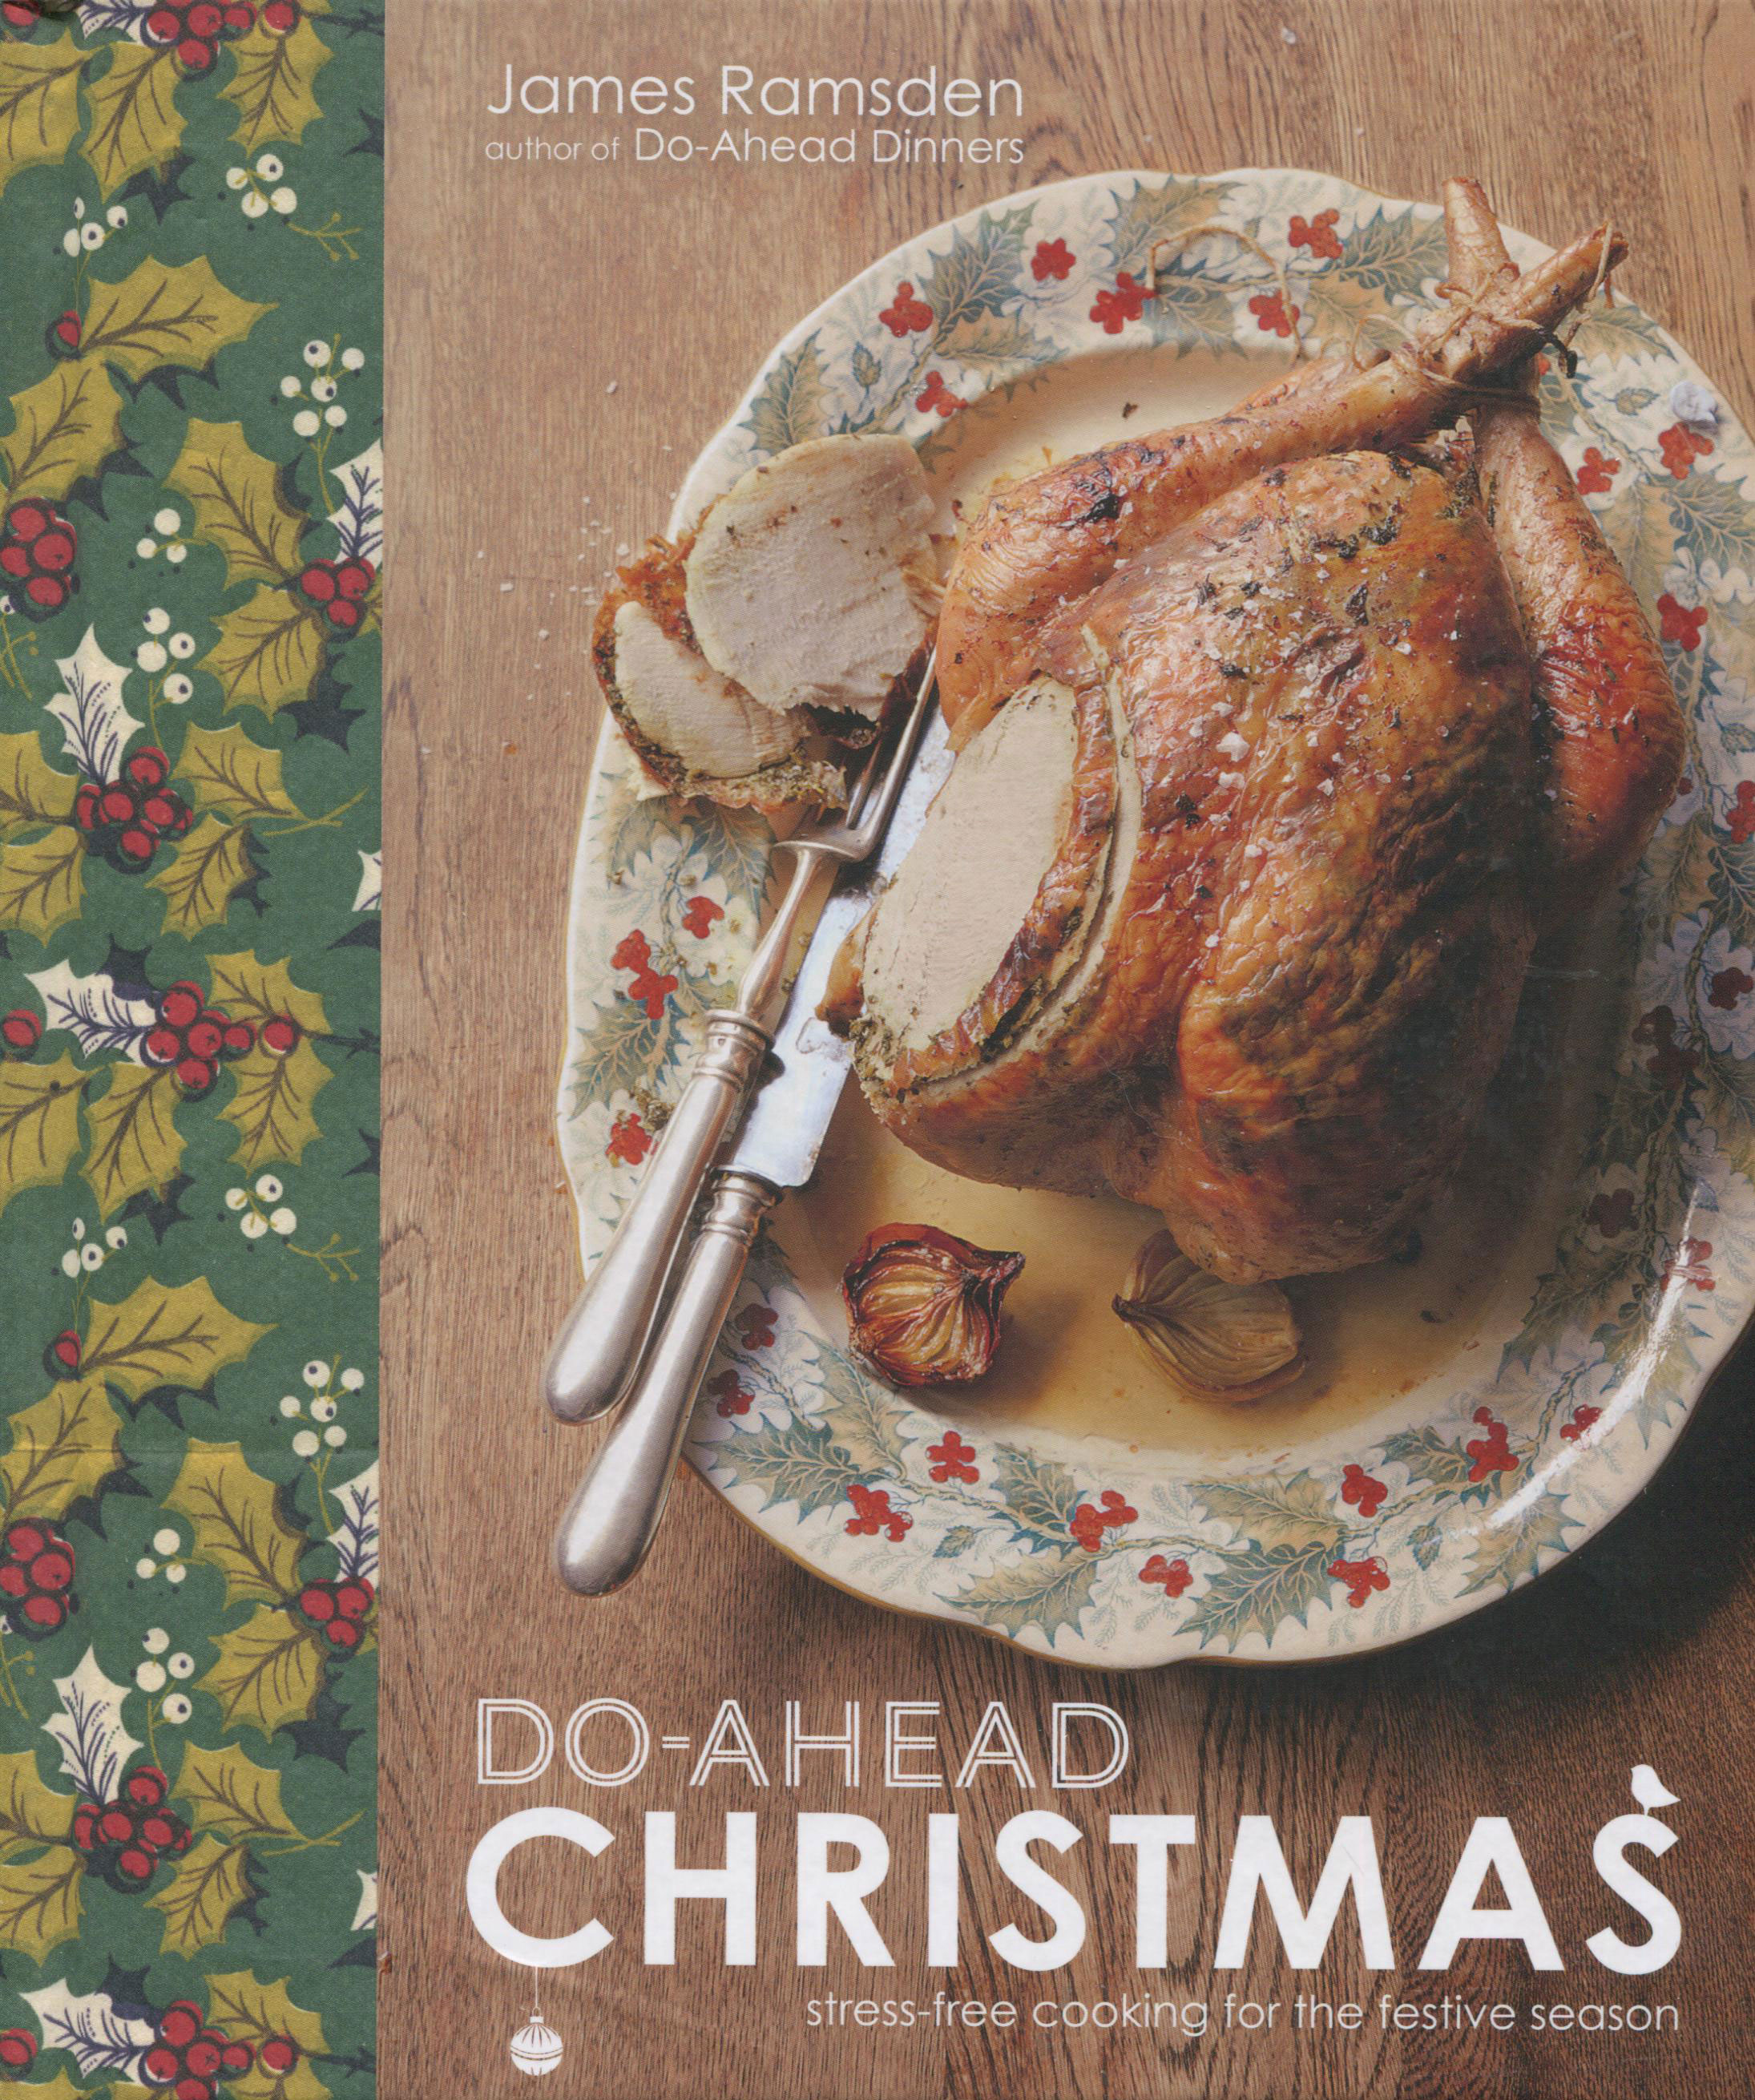 TBT Cookbook Review: Do-Ahead Christmas